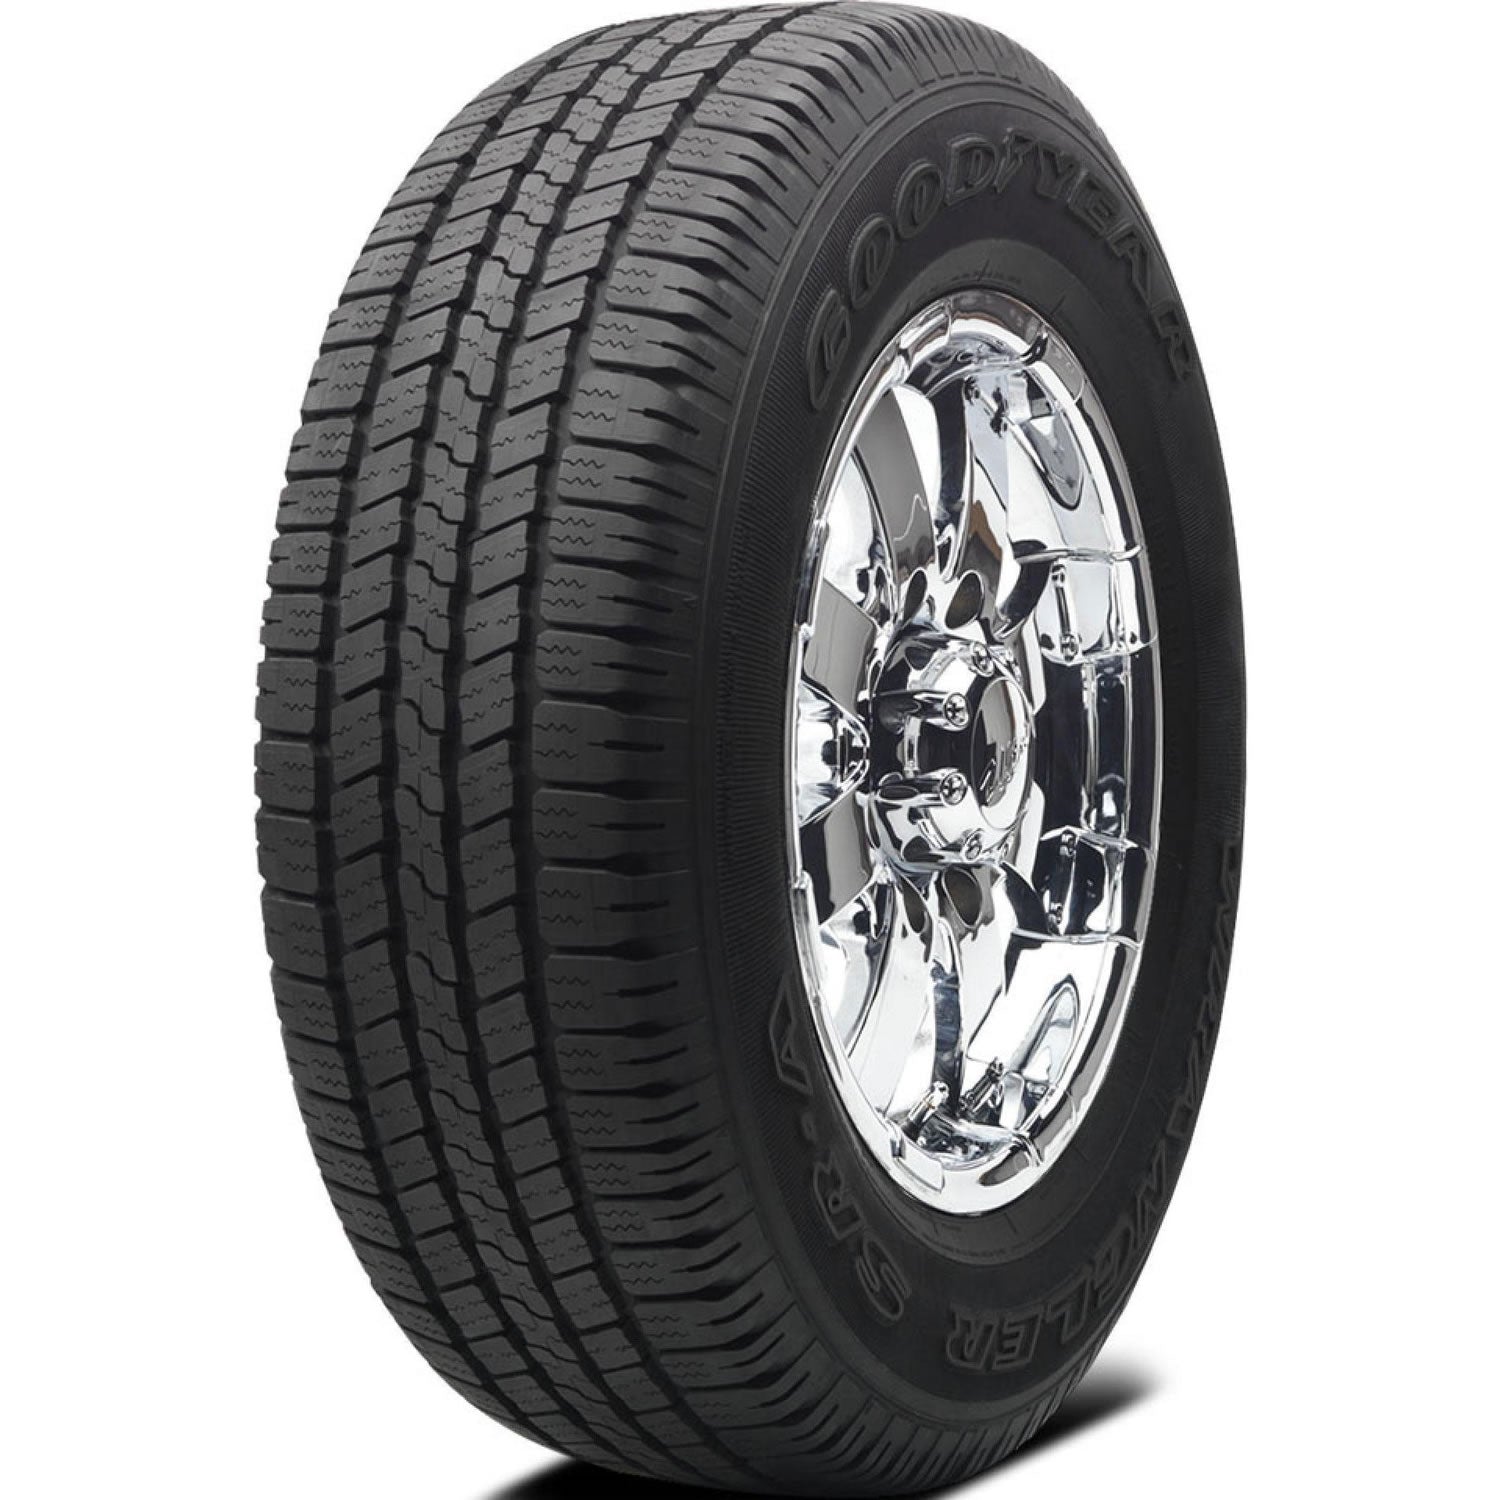 GOODYEAR WRANGLER SR-A LT245/70R17 (30.6X9.8R 17) Tires